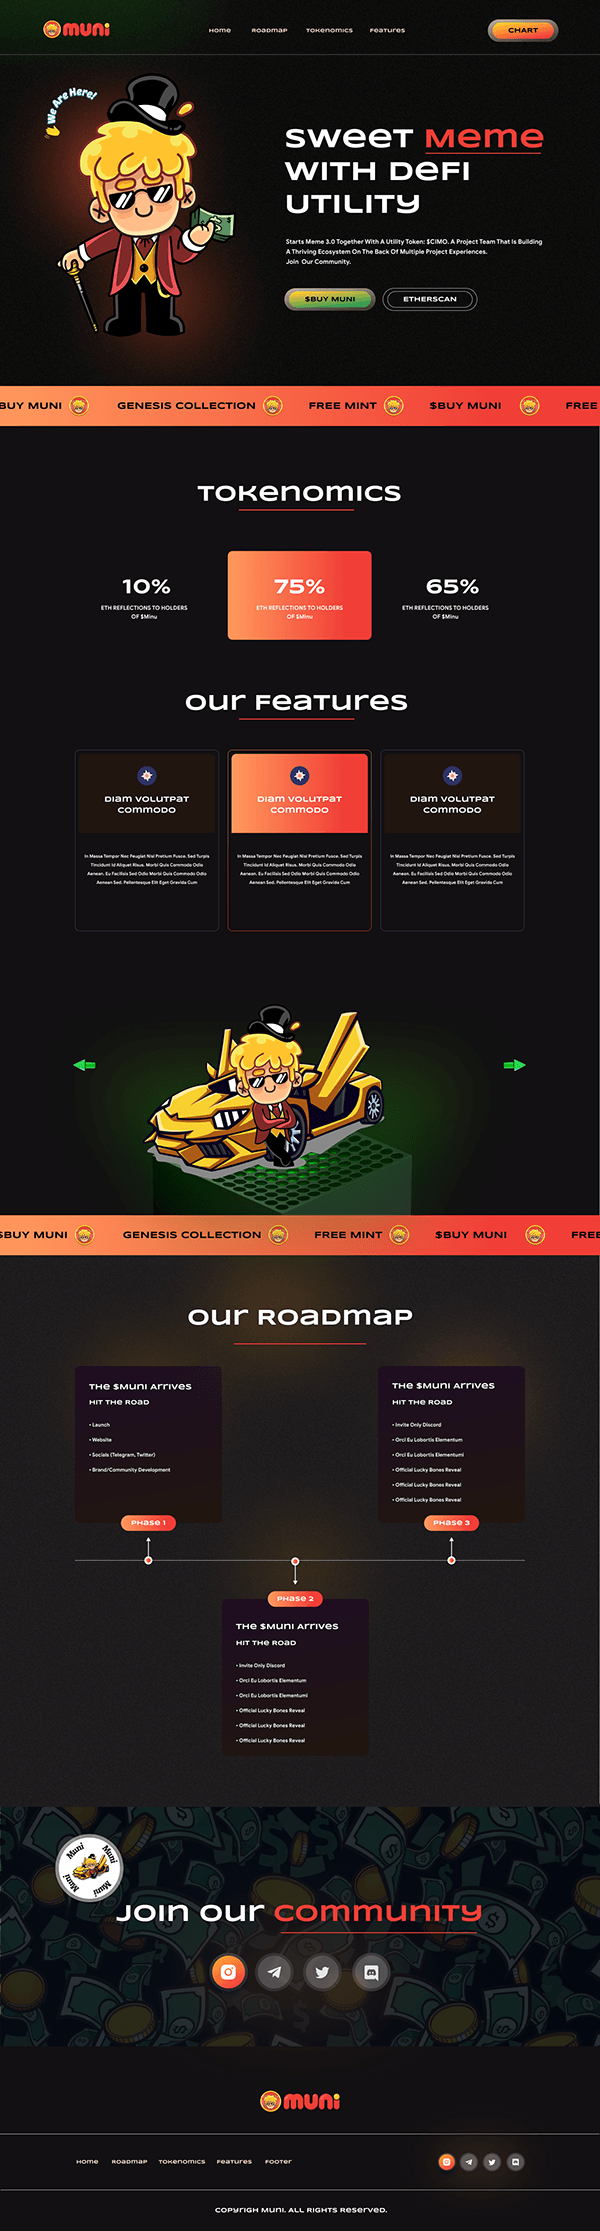 Meme coin landing page: website design